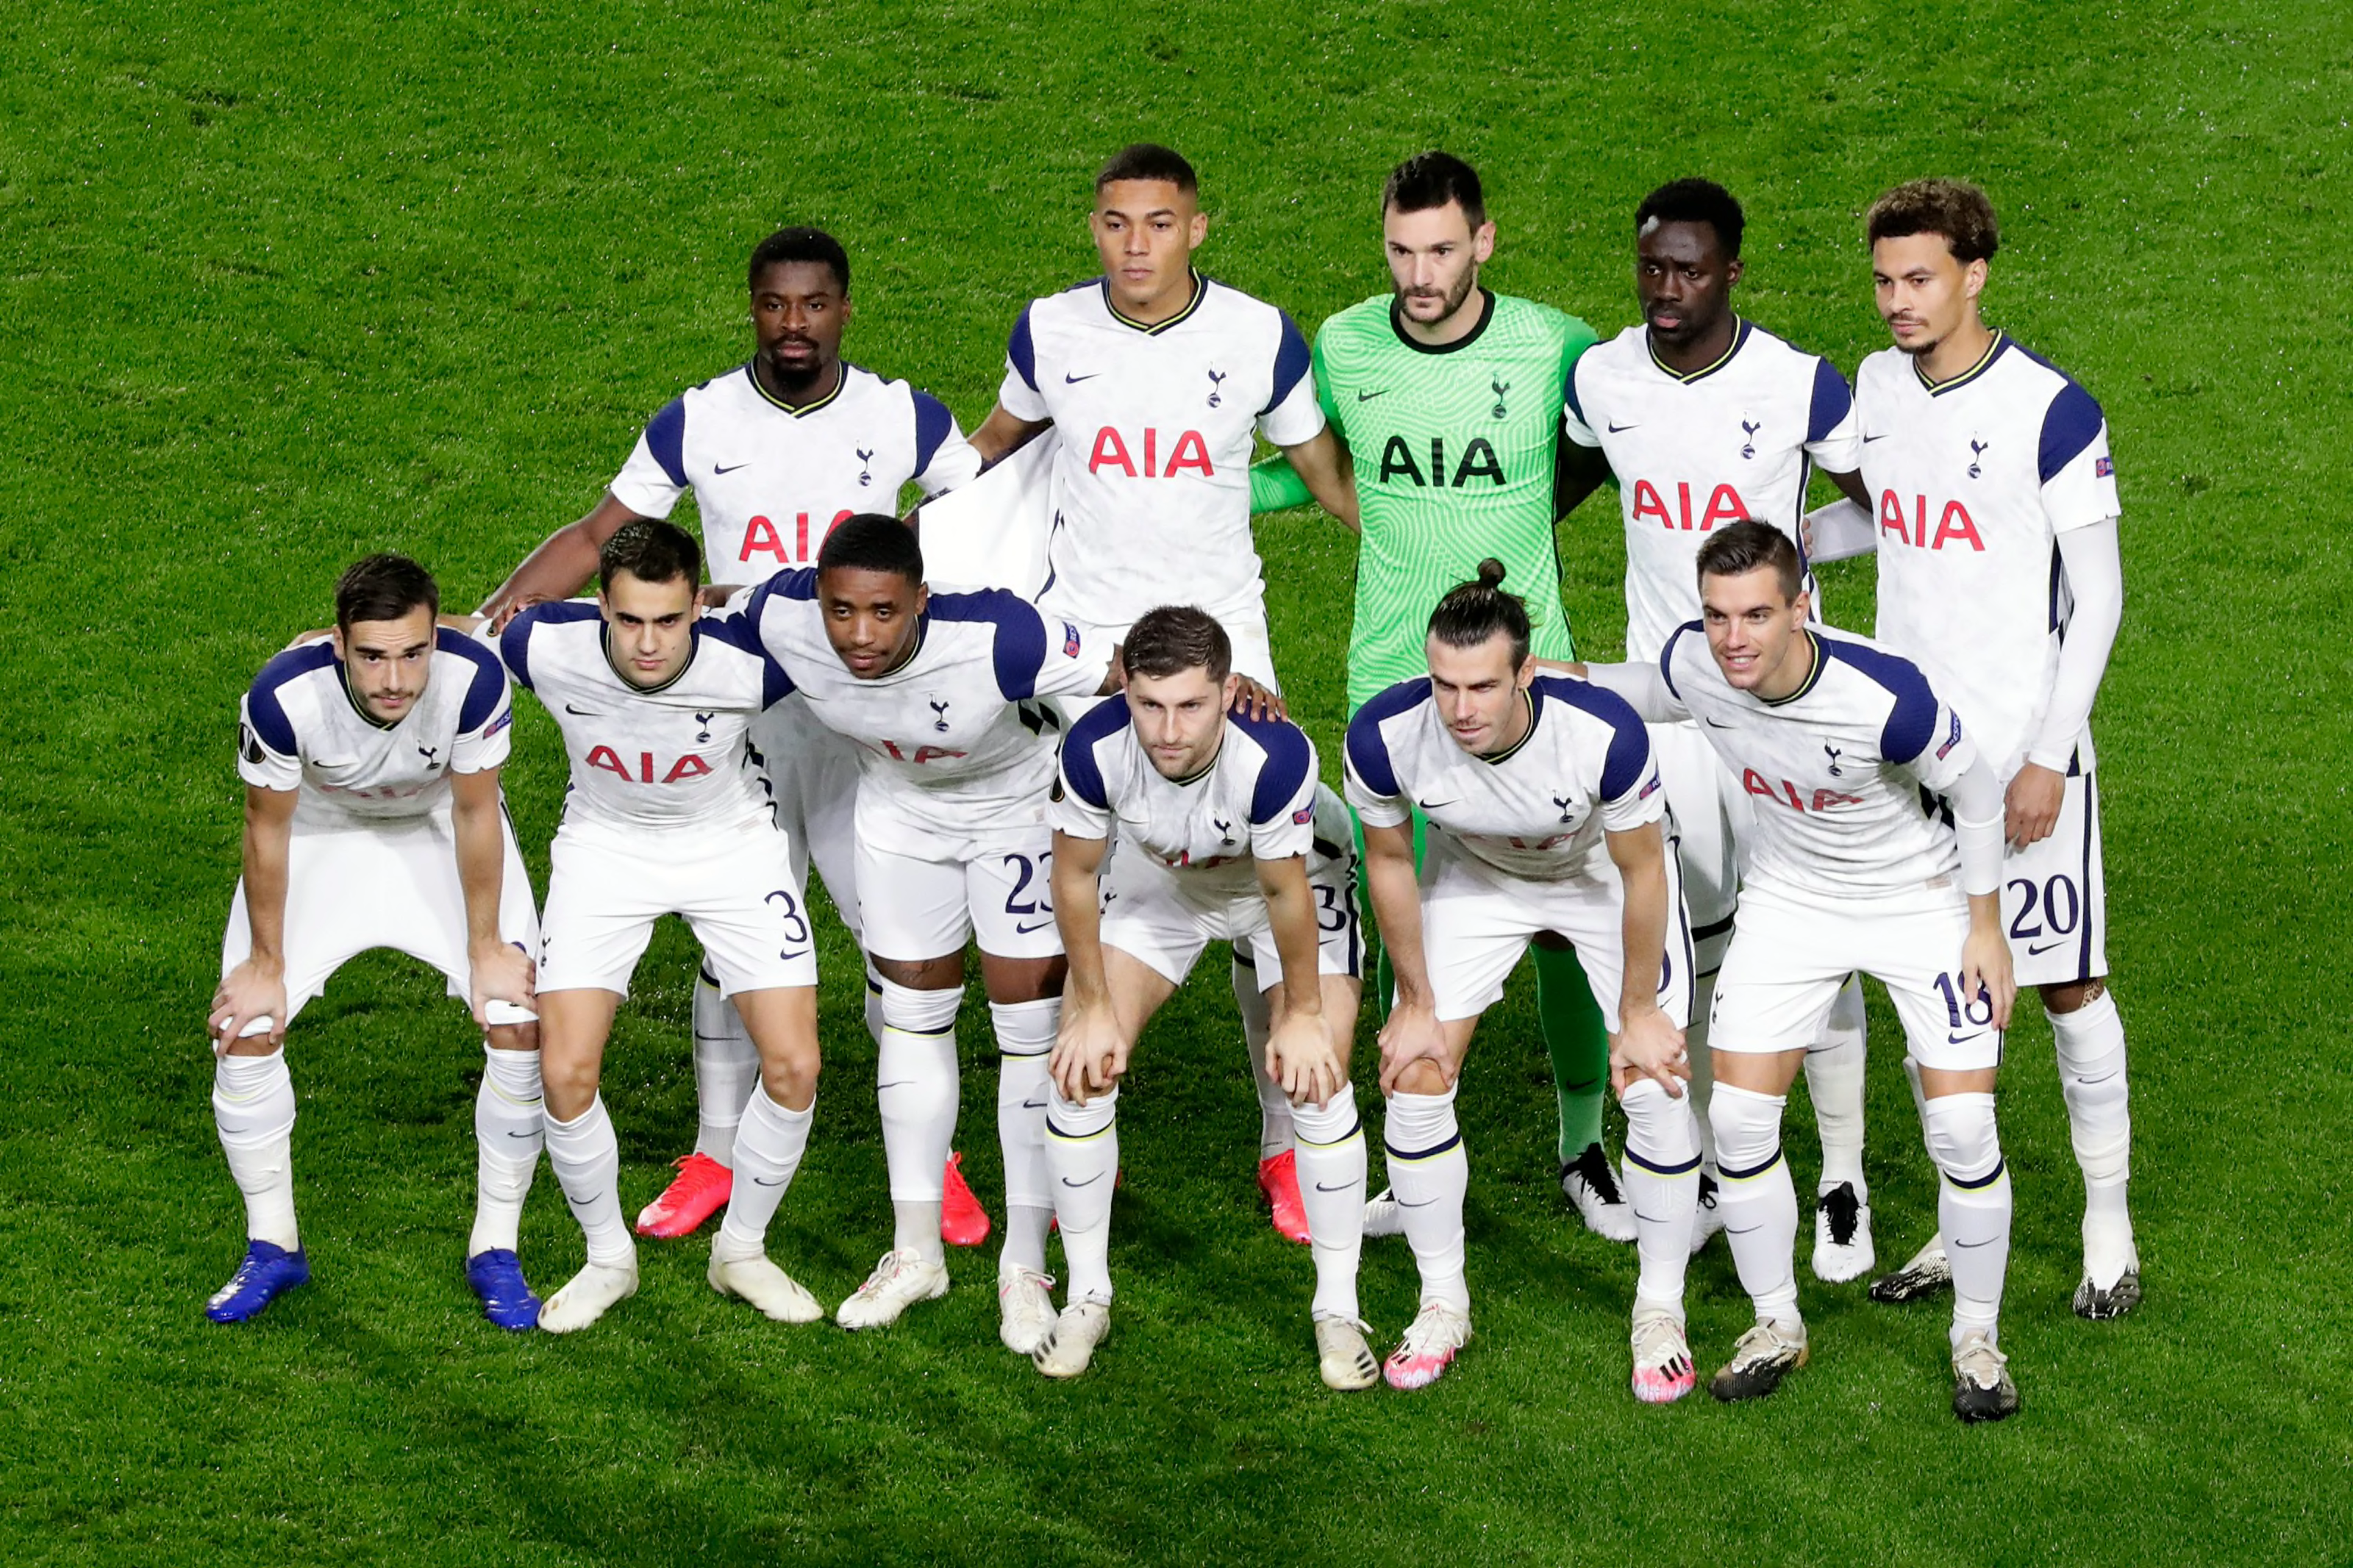 Tottenham Hotspur In Europa League This Season An Update